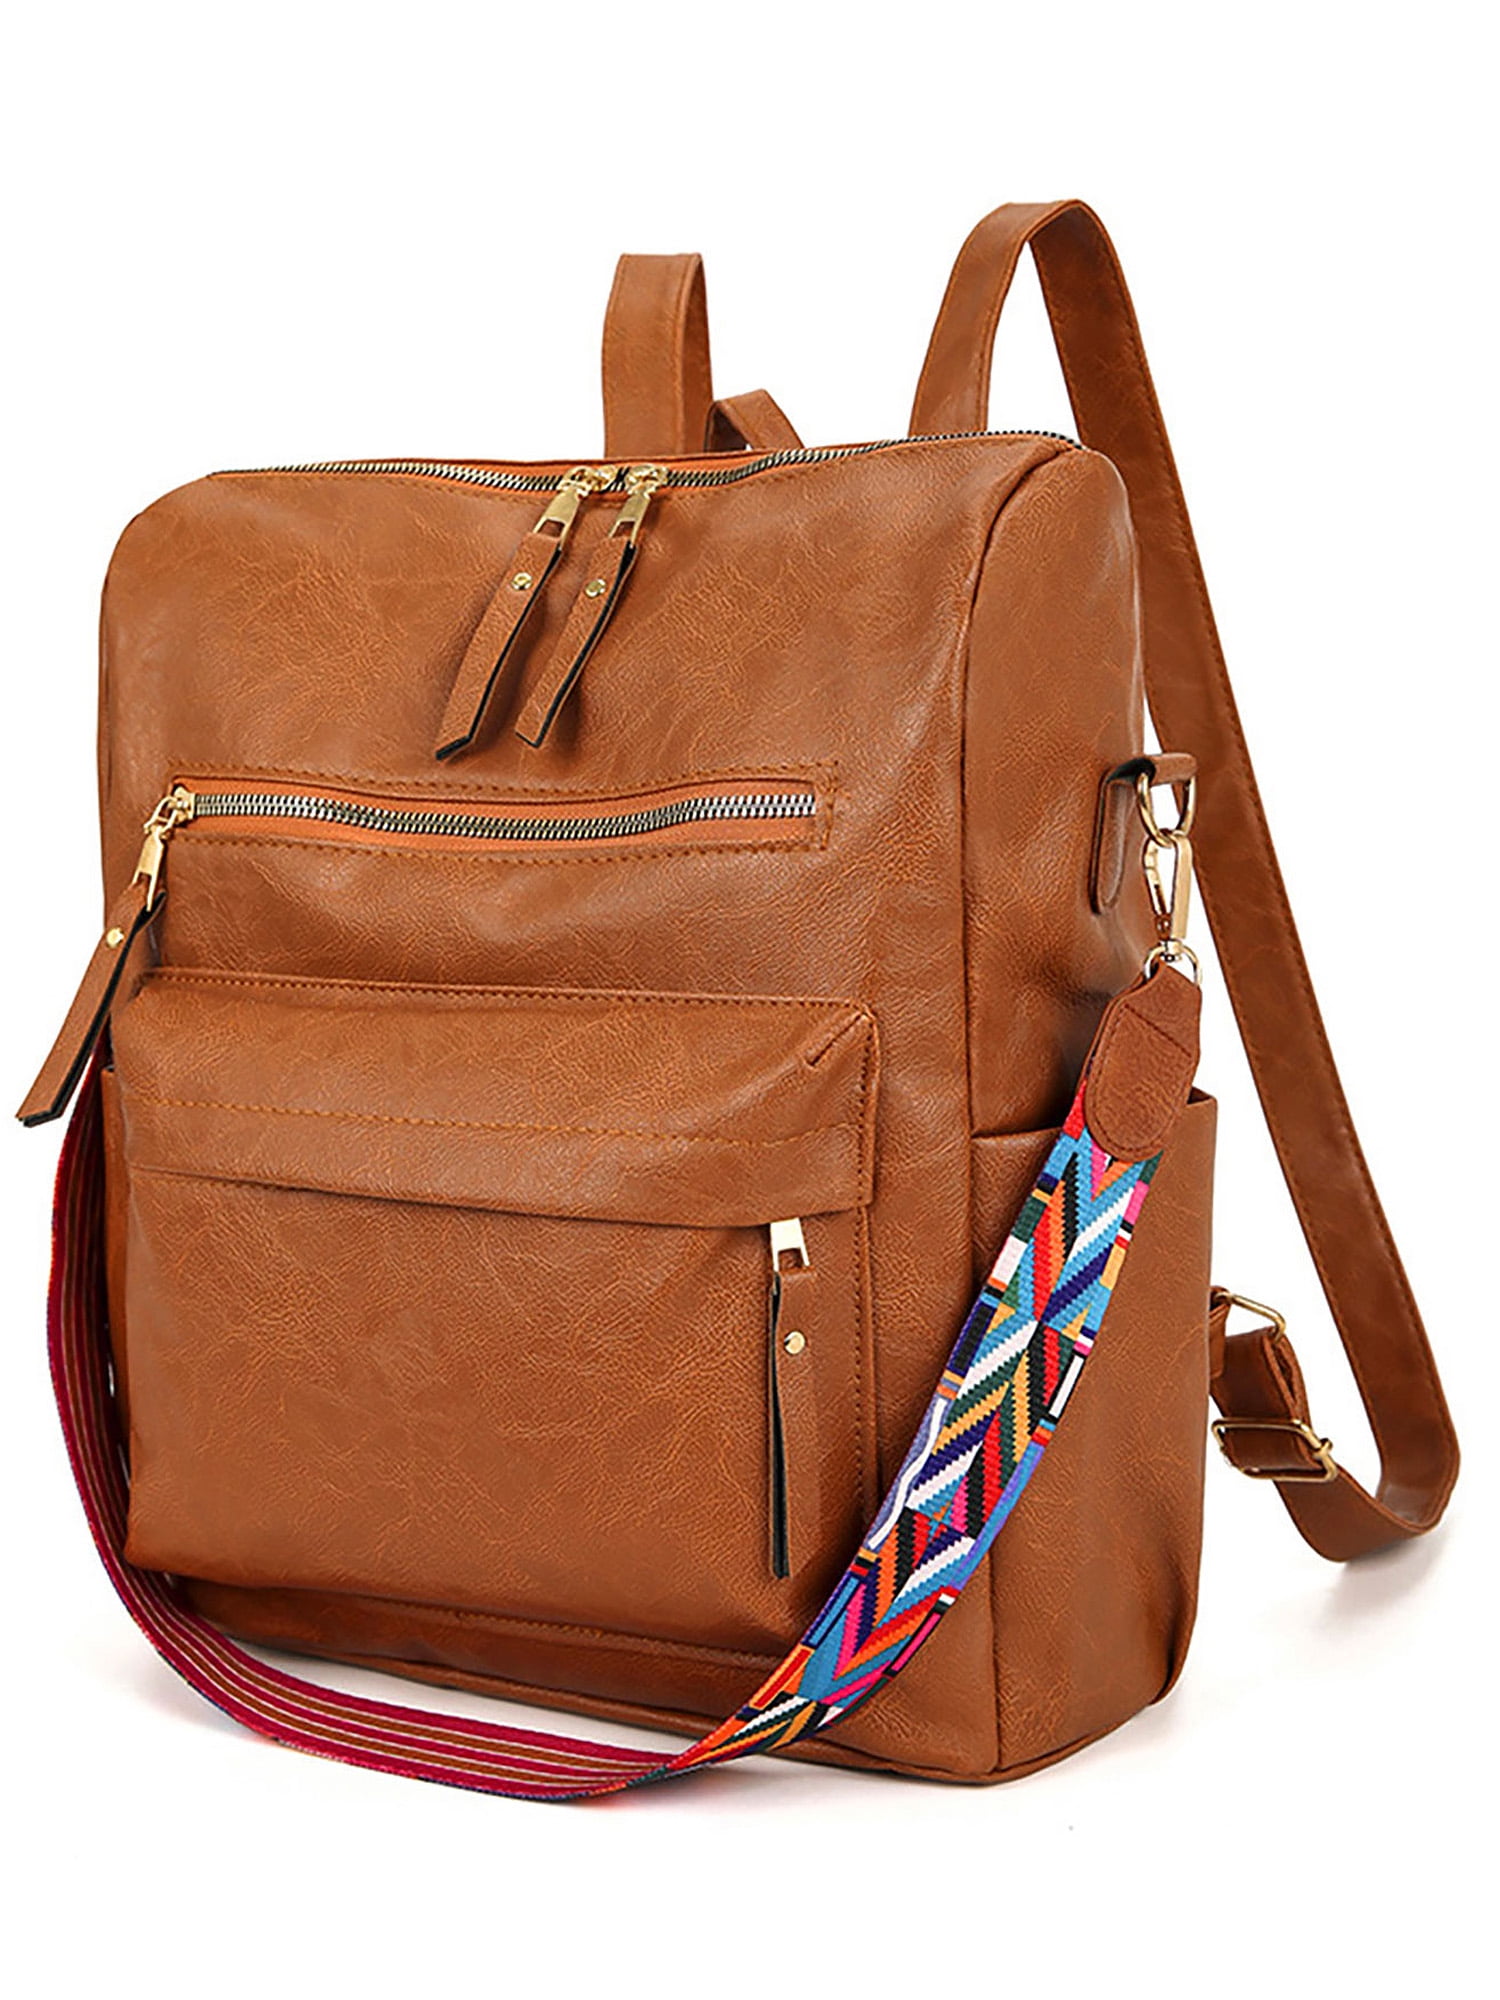 New Fashion Women Handbag Messenger Backpack Tote Rucksack Satchel School Bag 